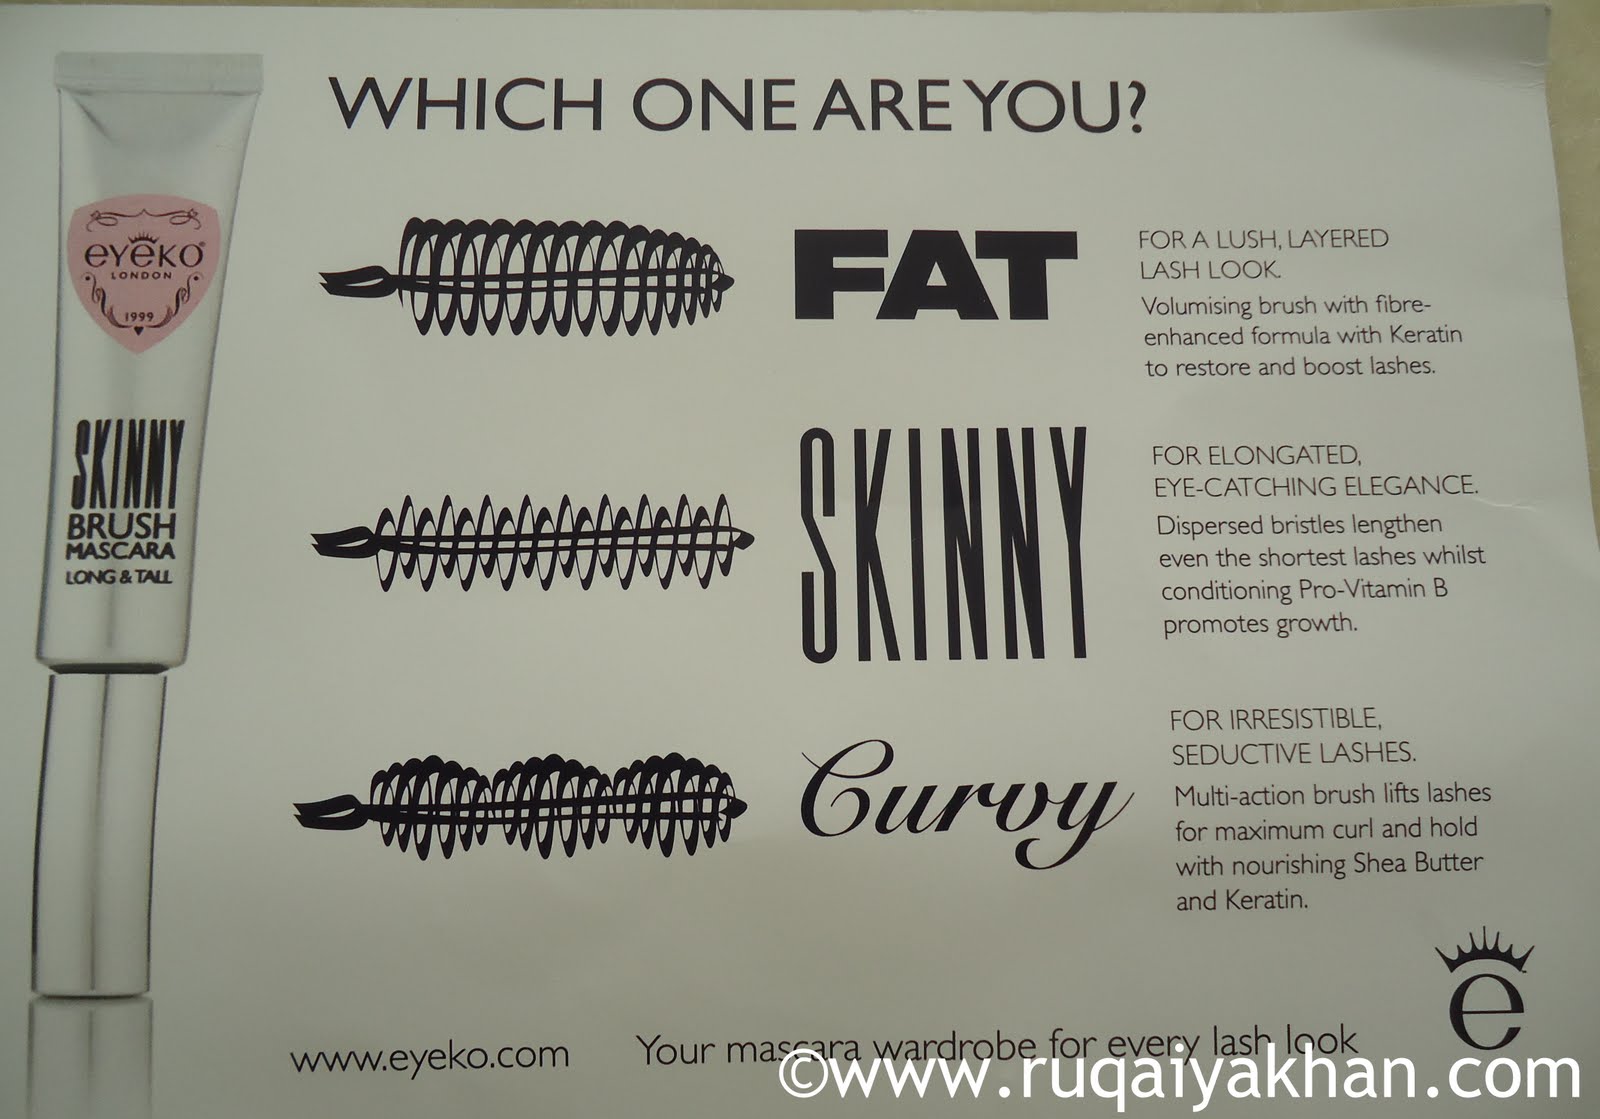 Ruqaiya Khan: Eyeko Skinny Brush Mascara Review